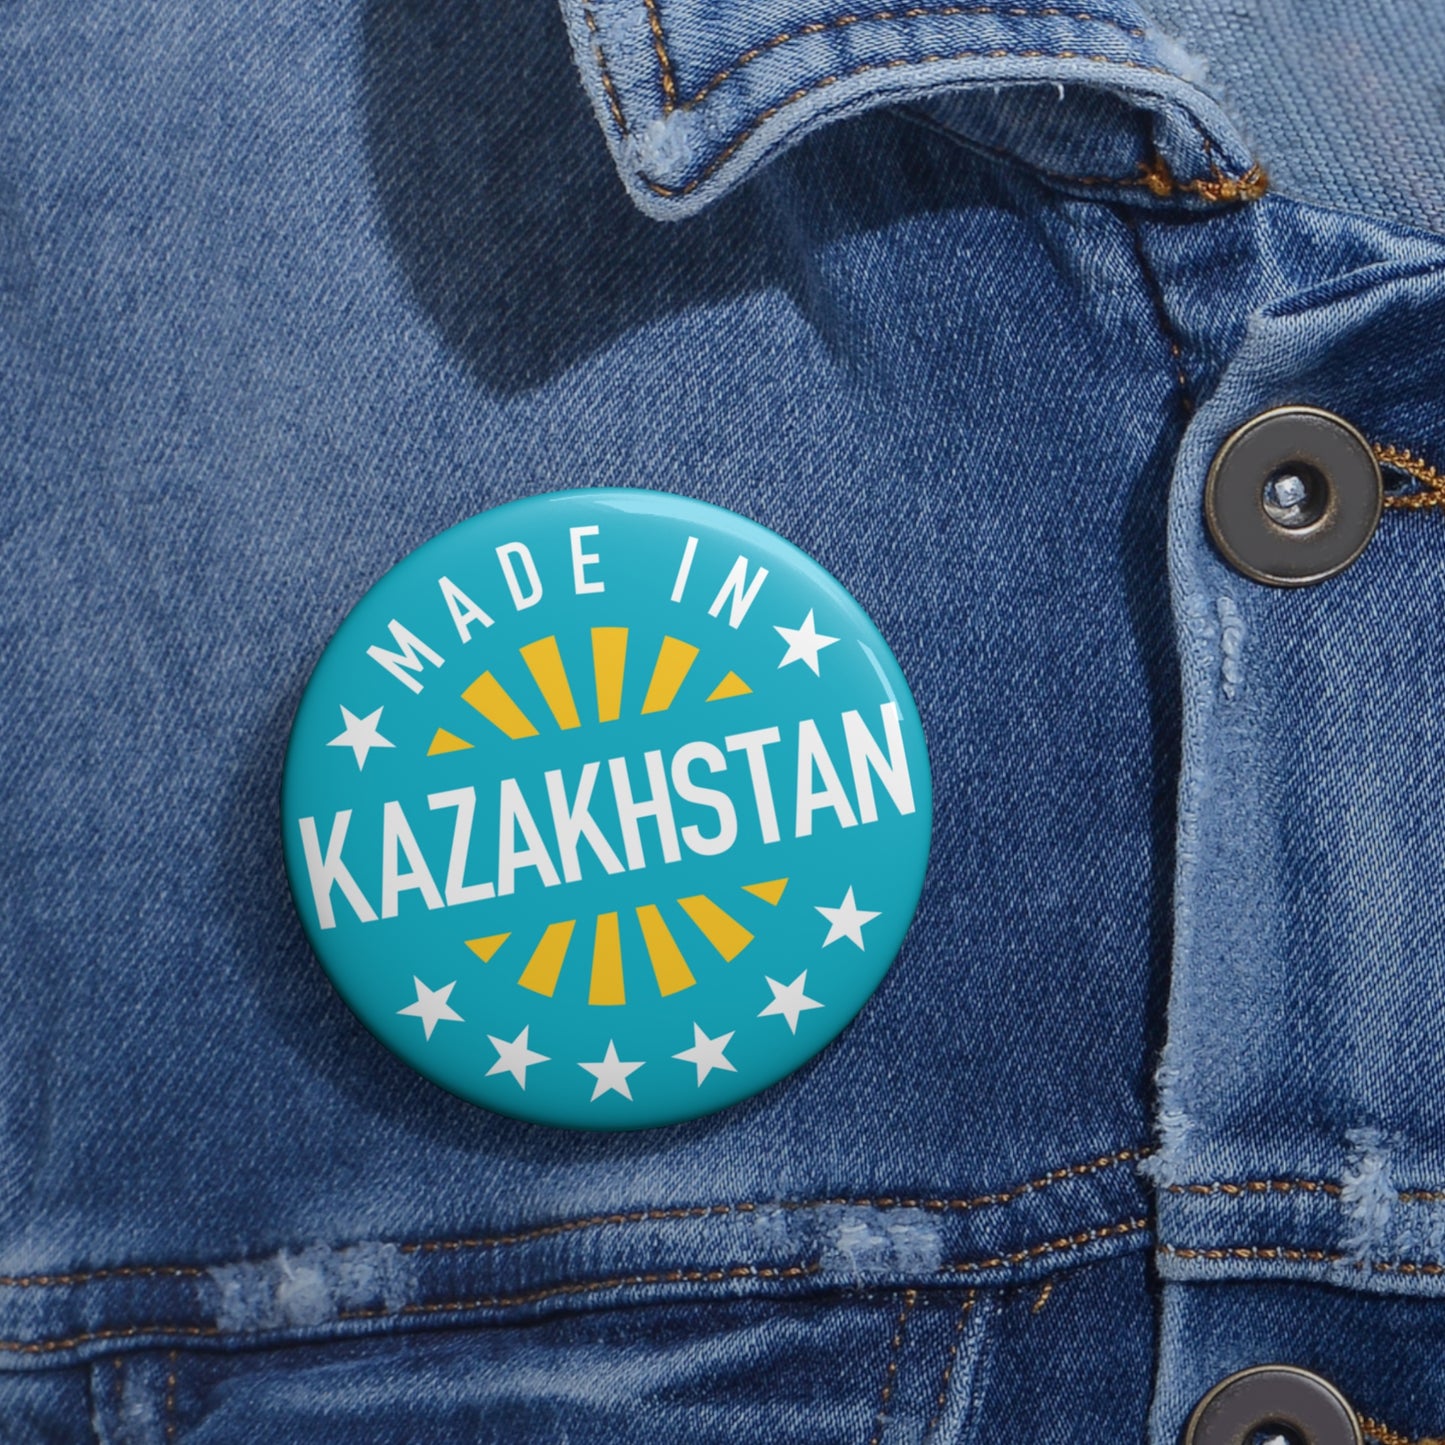 Made in Kazakhstan Pin Buttons